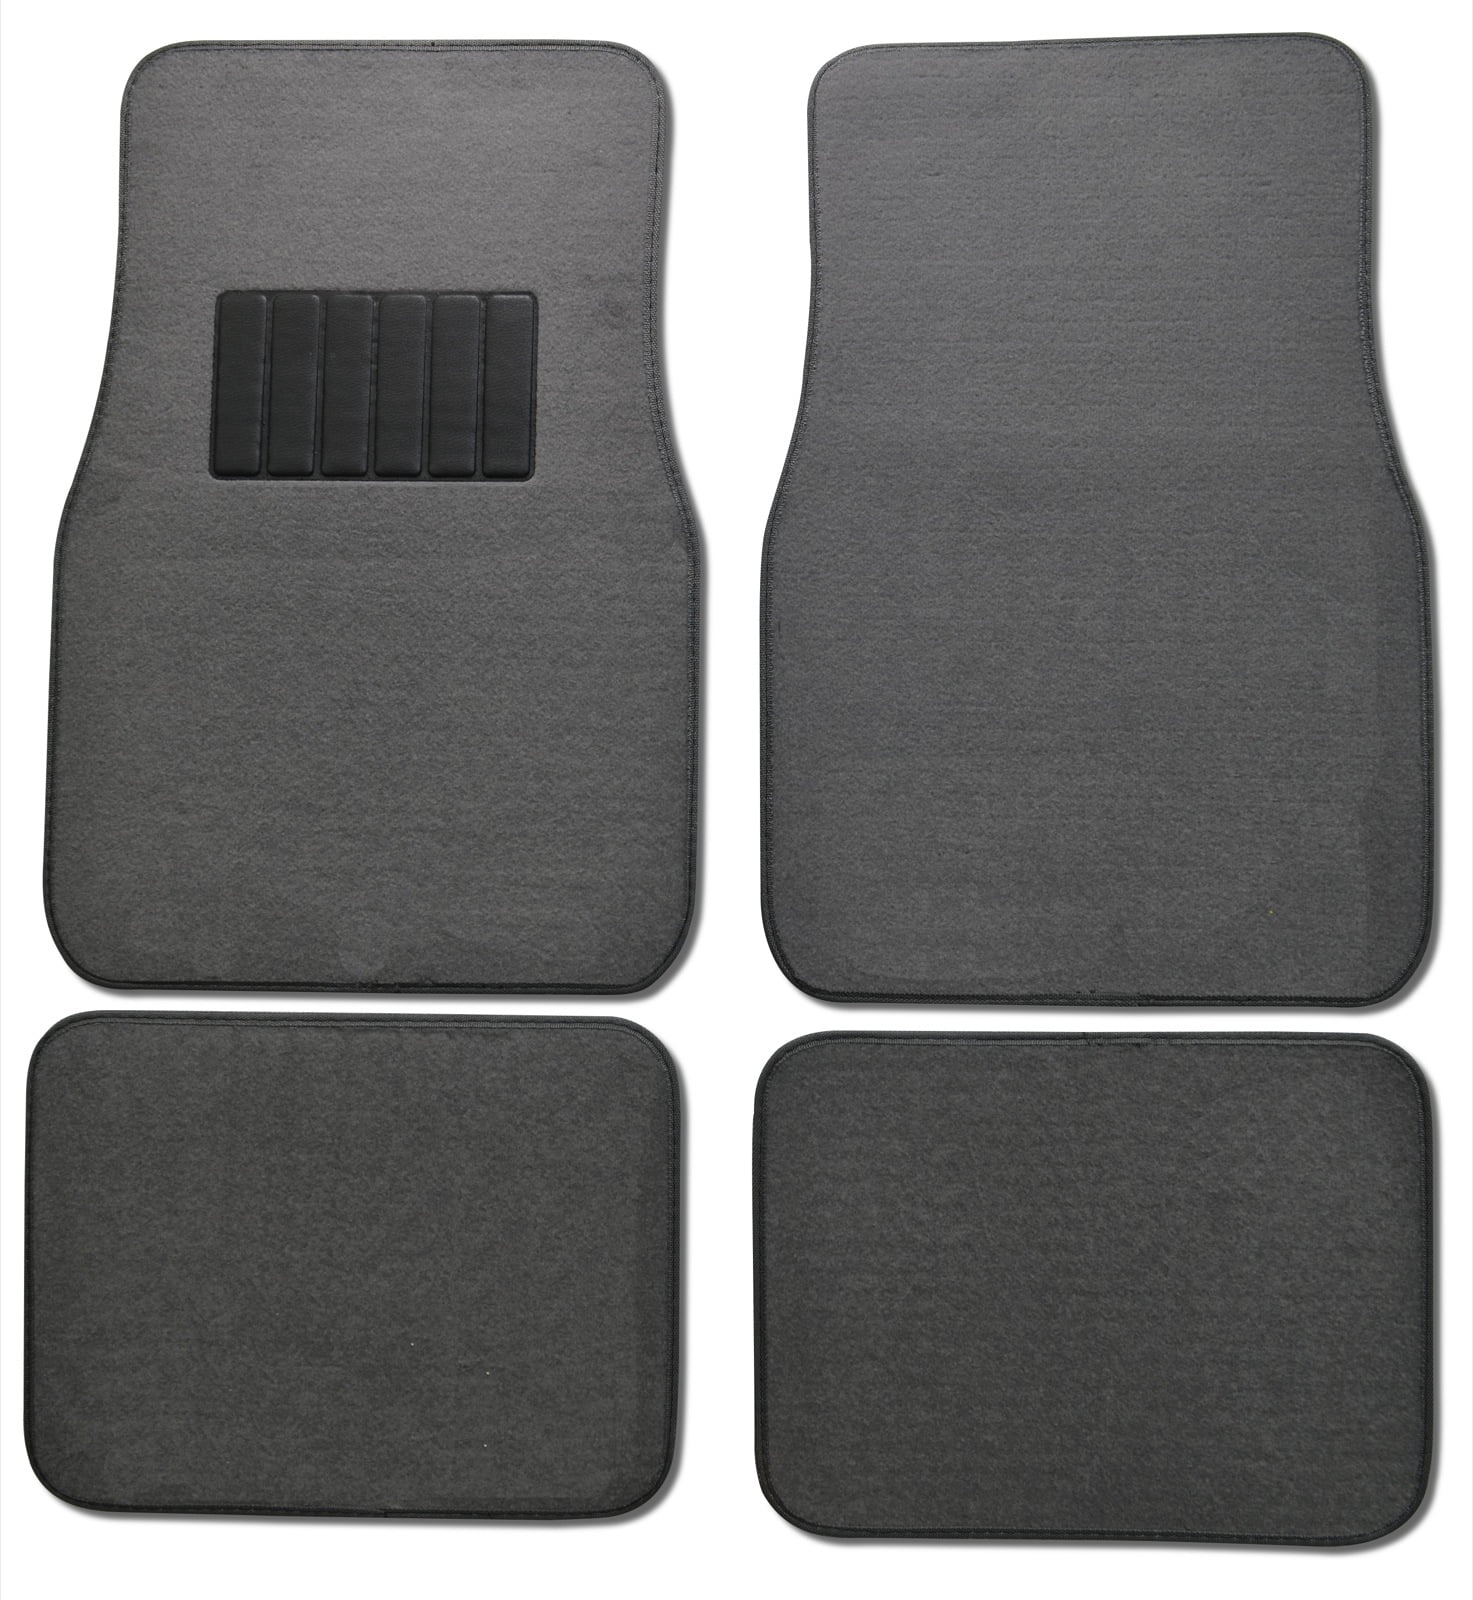 BDK Car Floor Mats 4 Pieces Carpet Protection - Universal Fit for